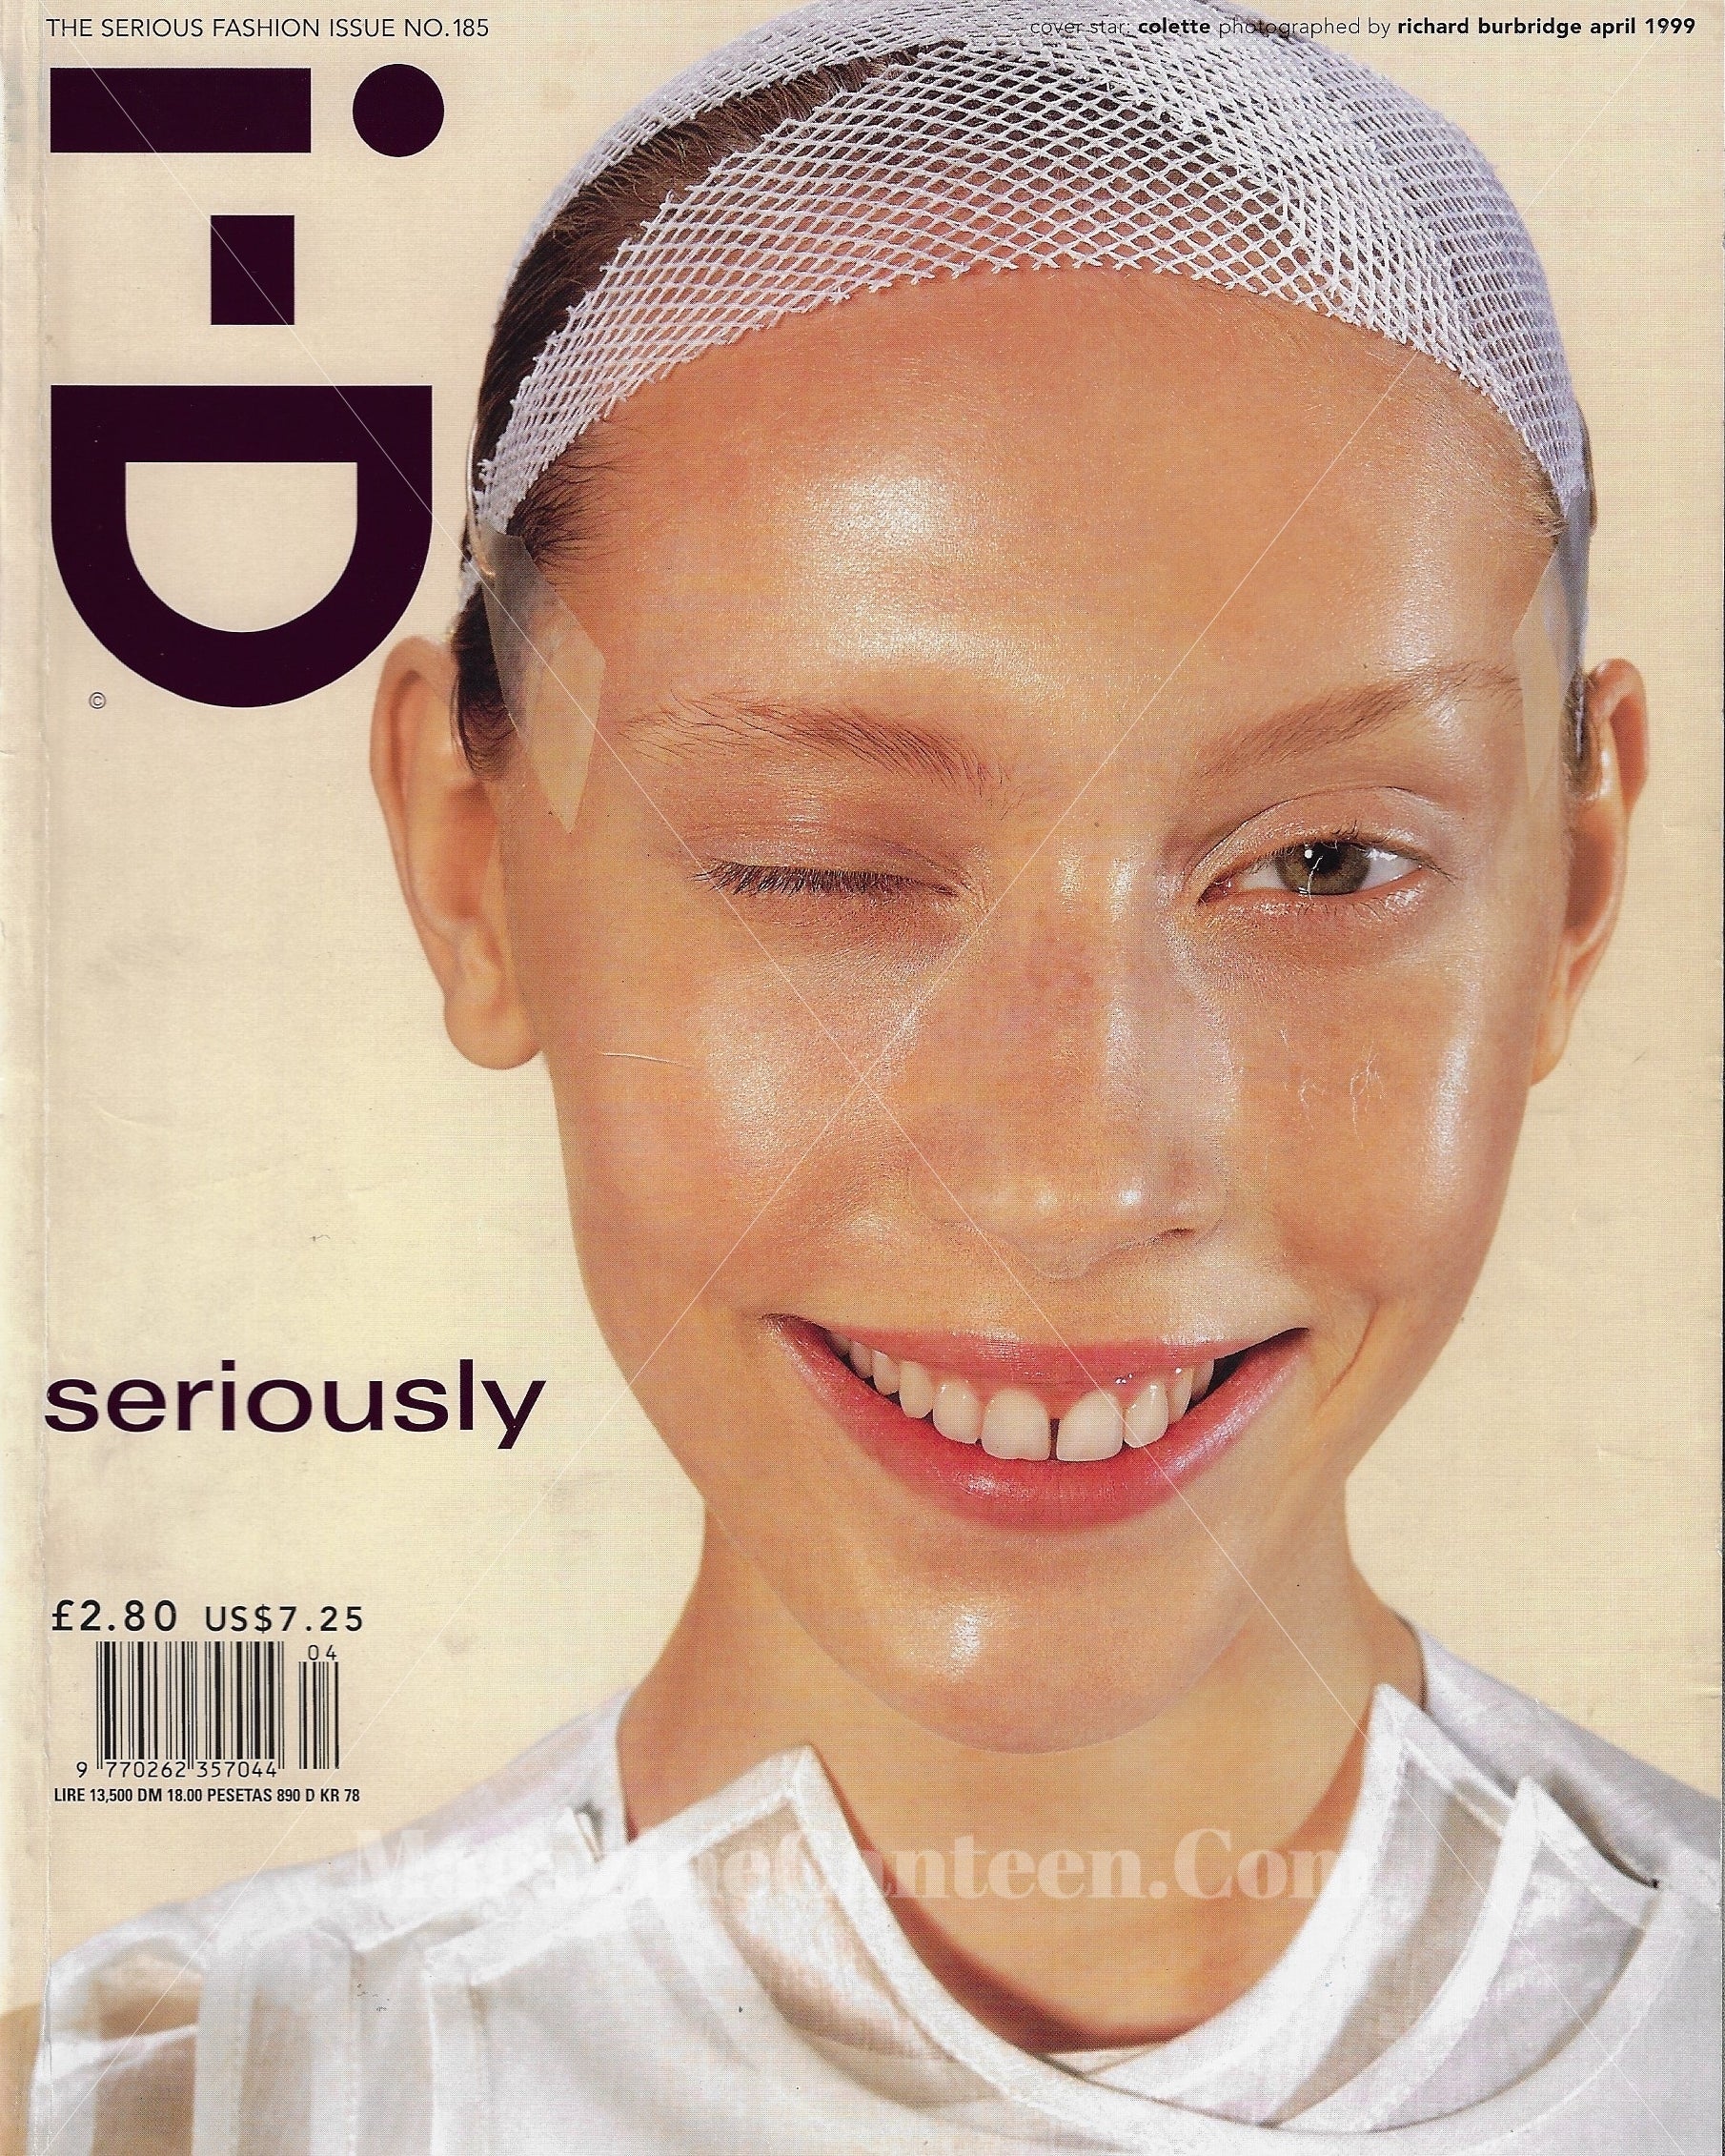 I-D Magazine 185 - Richard Burbridge 1999